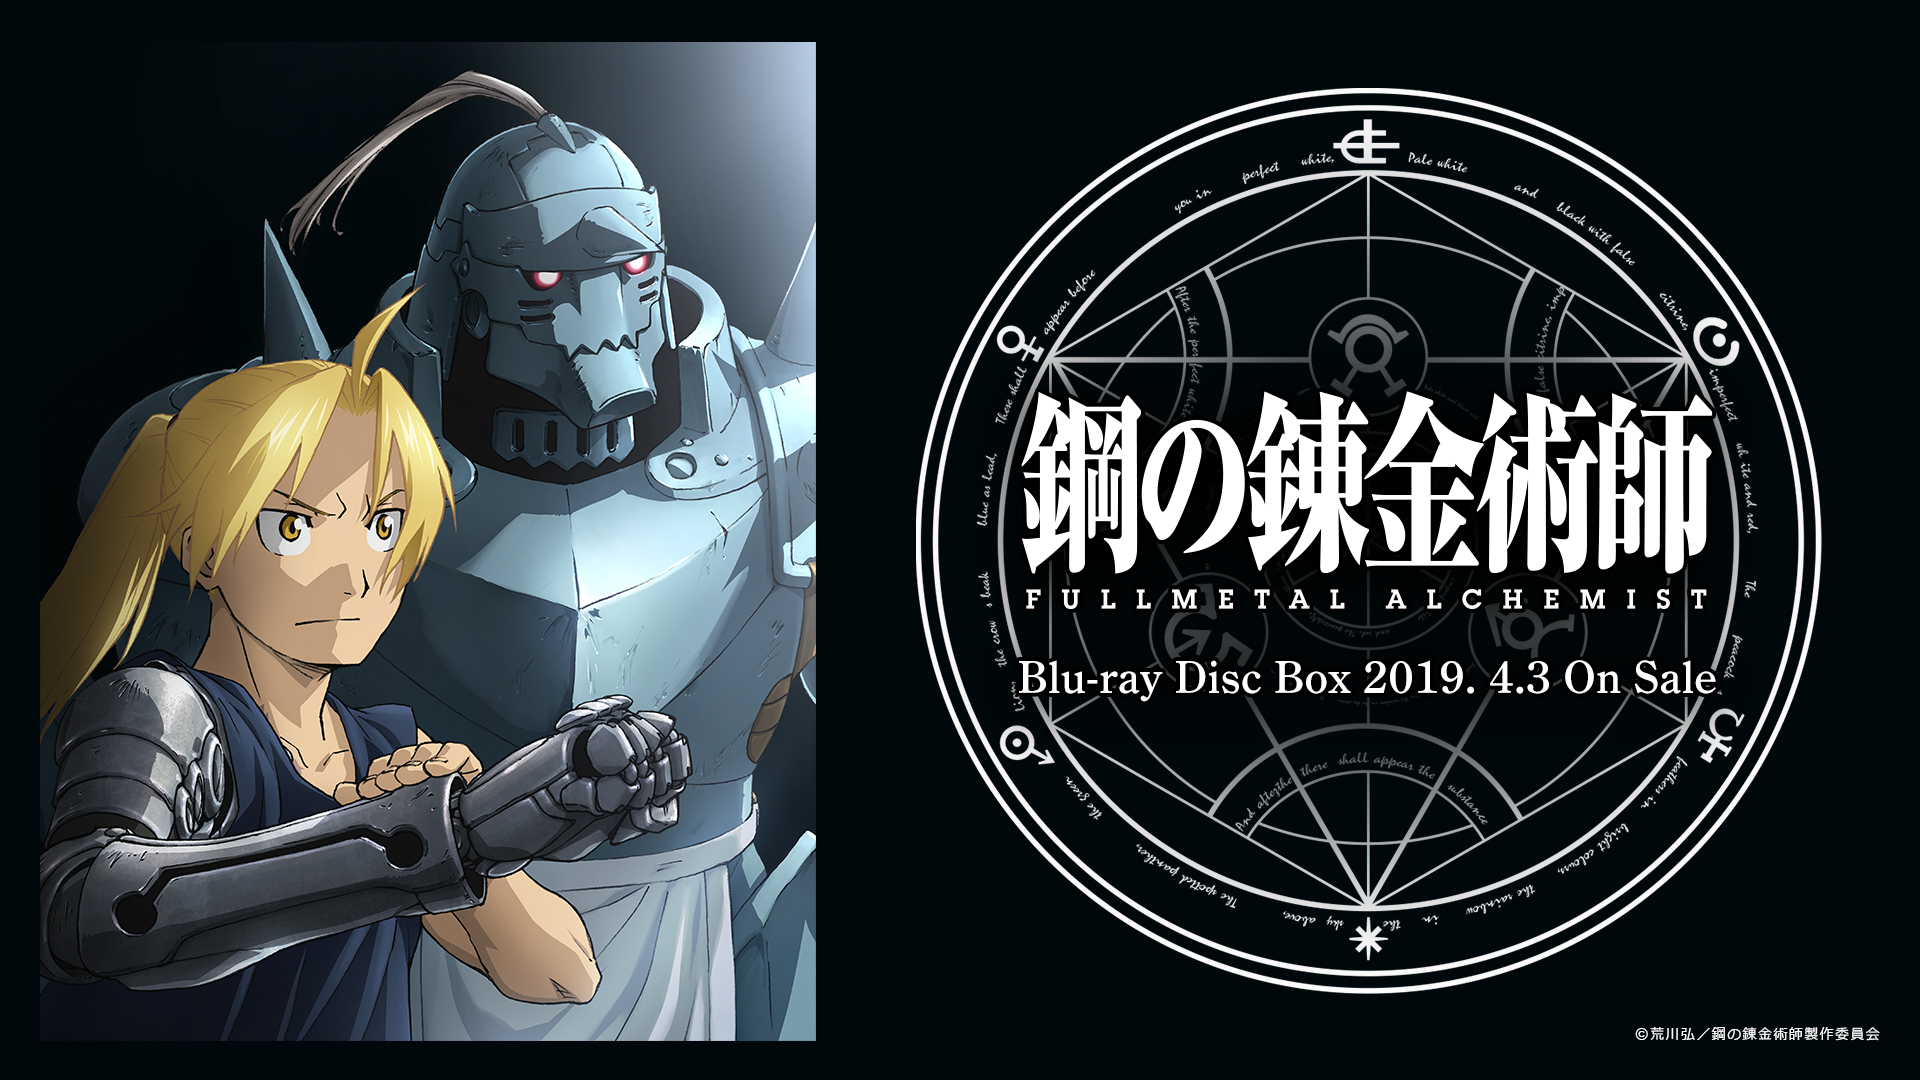 鋼の錬金術師 Fullmetal Alchemist Blu Ray Disc Box 19 4 3 発売